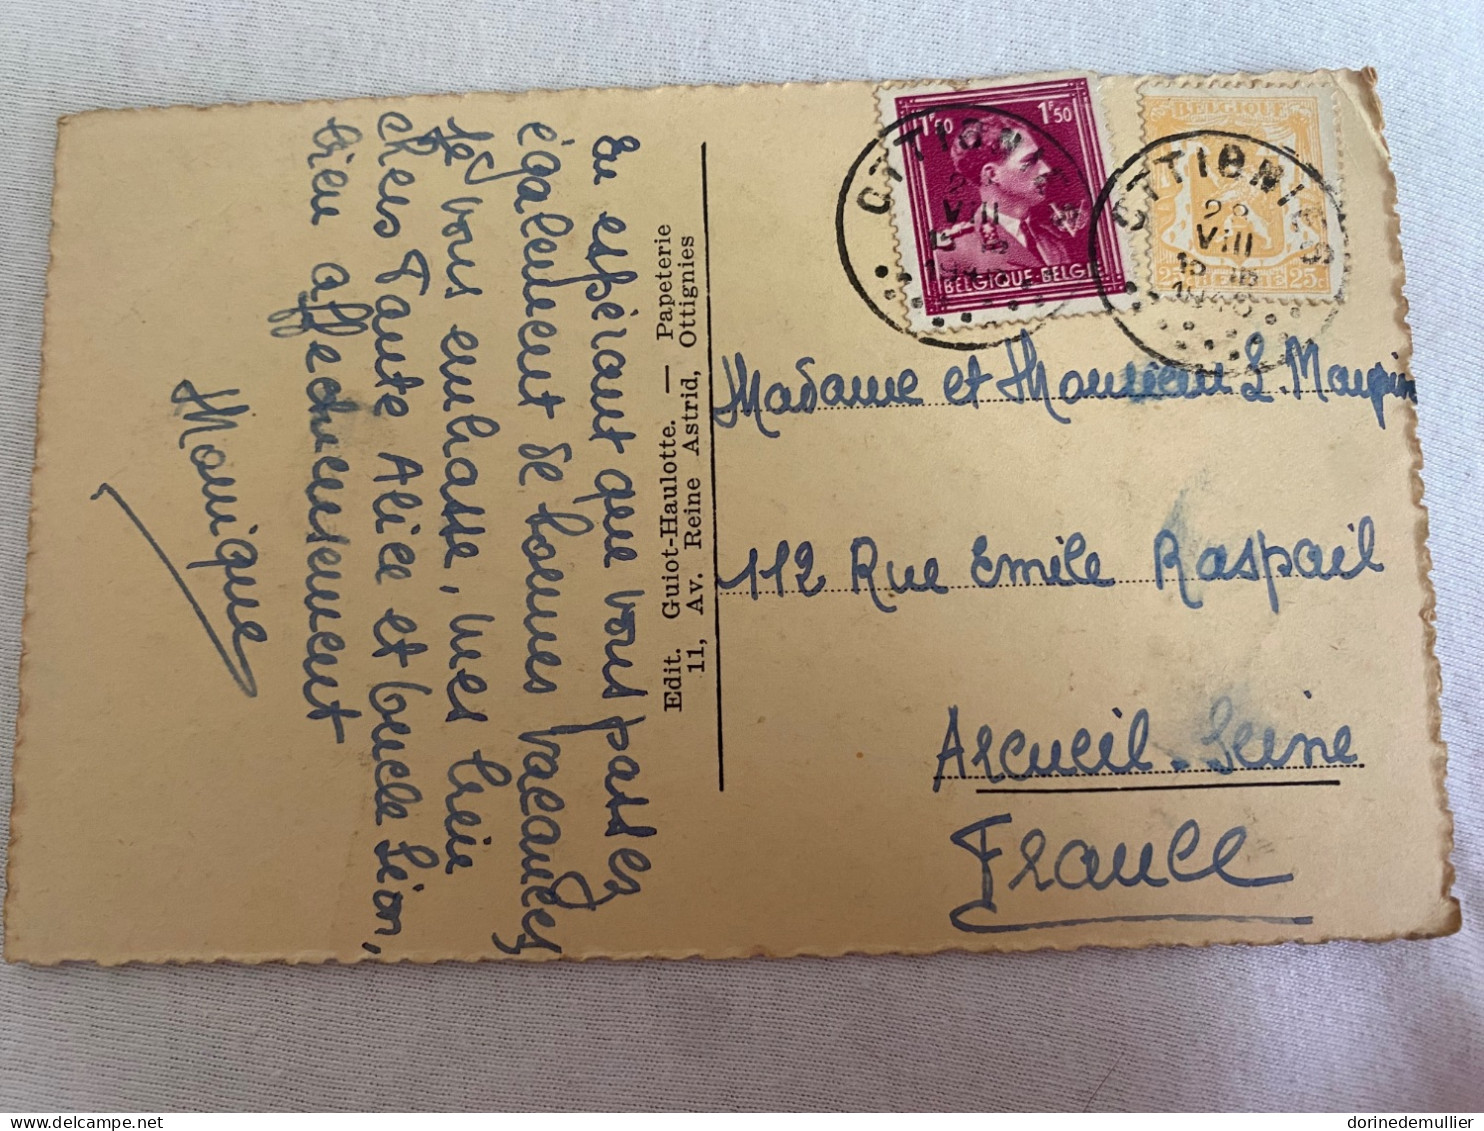 Cartes postales anciennes Belgiques